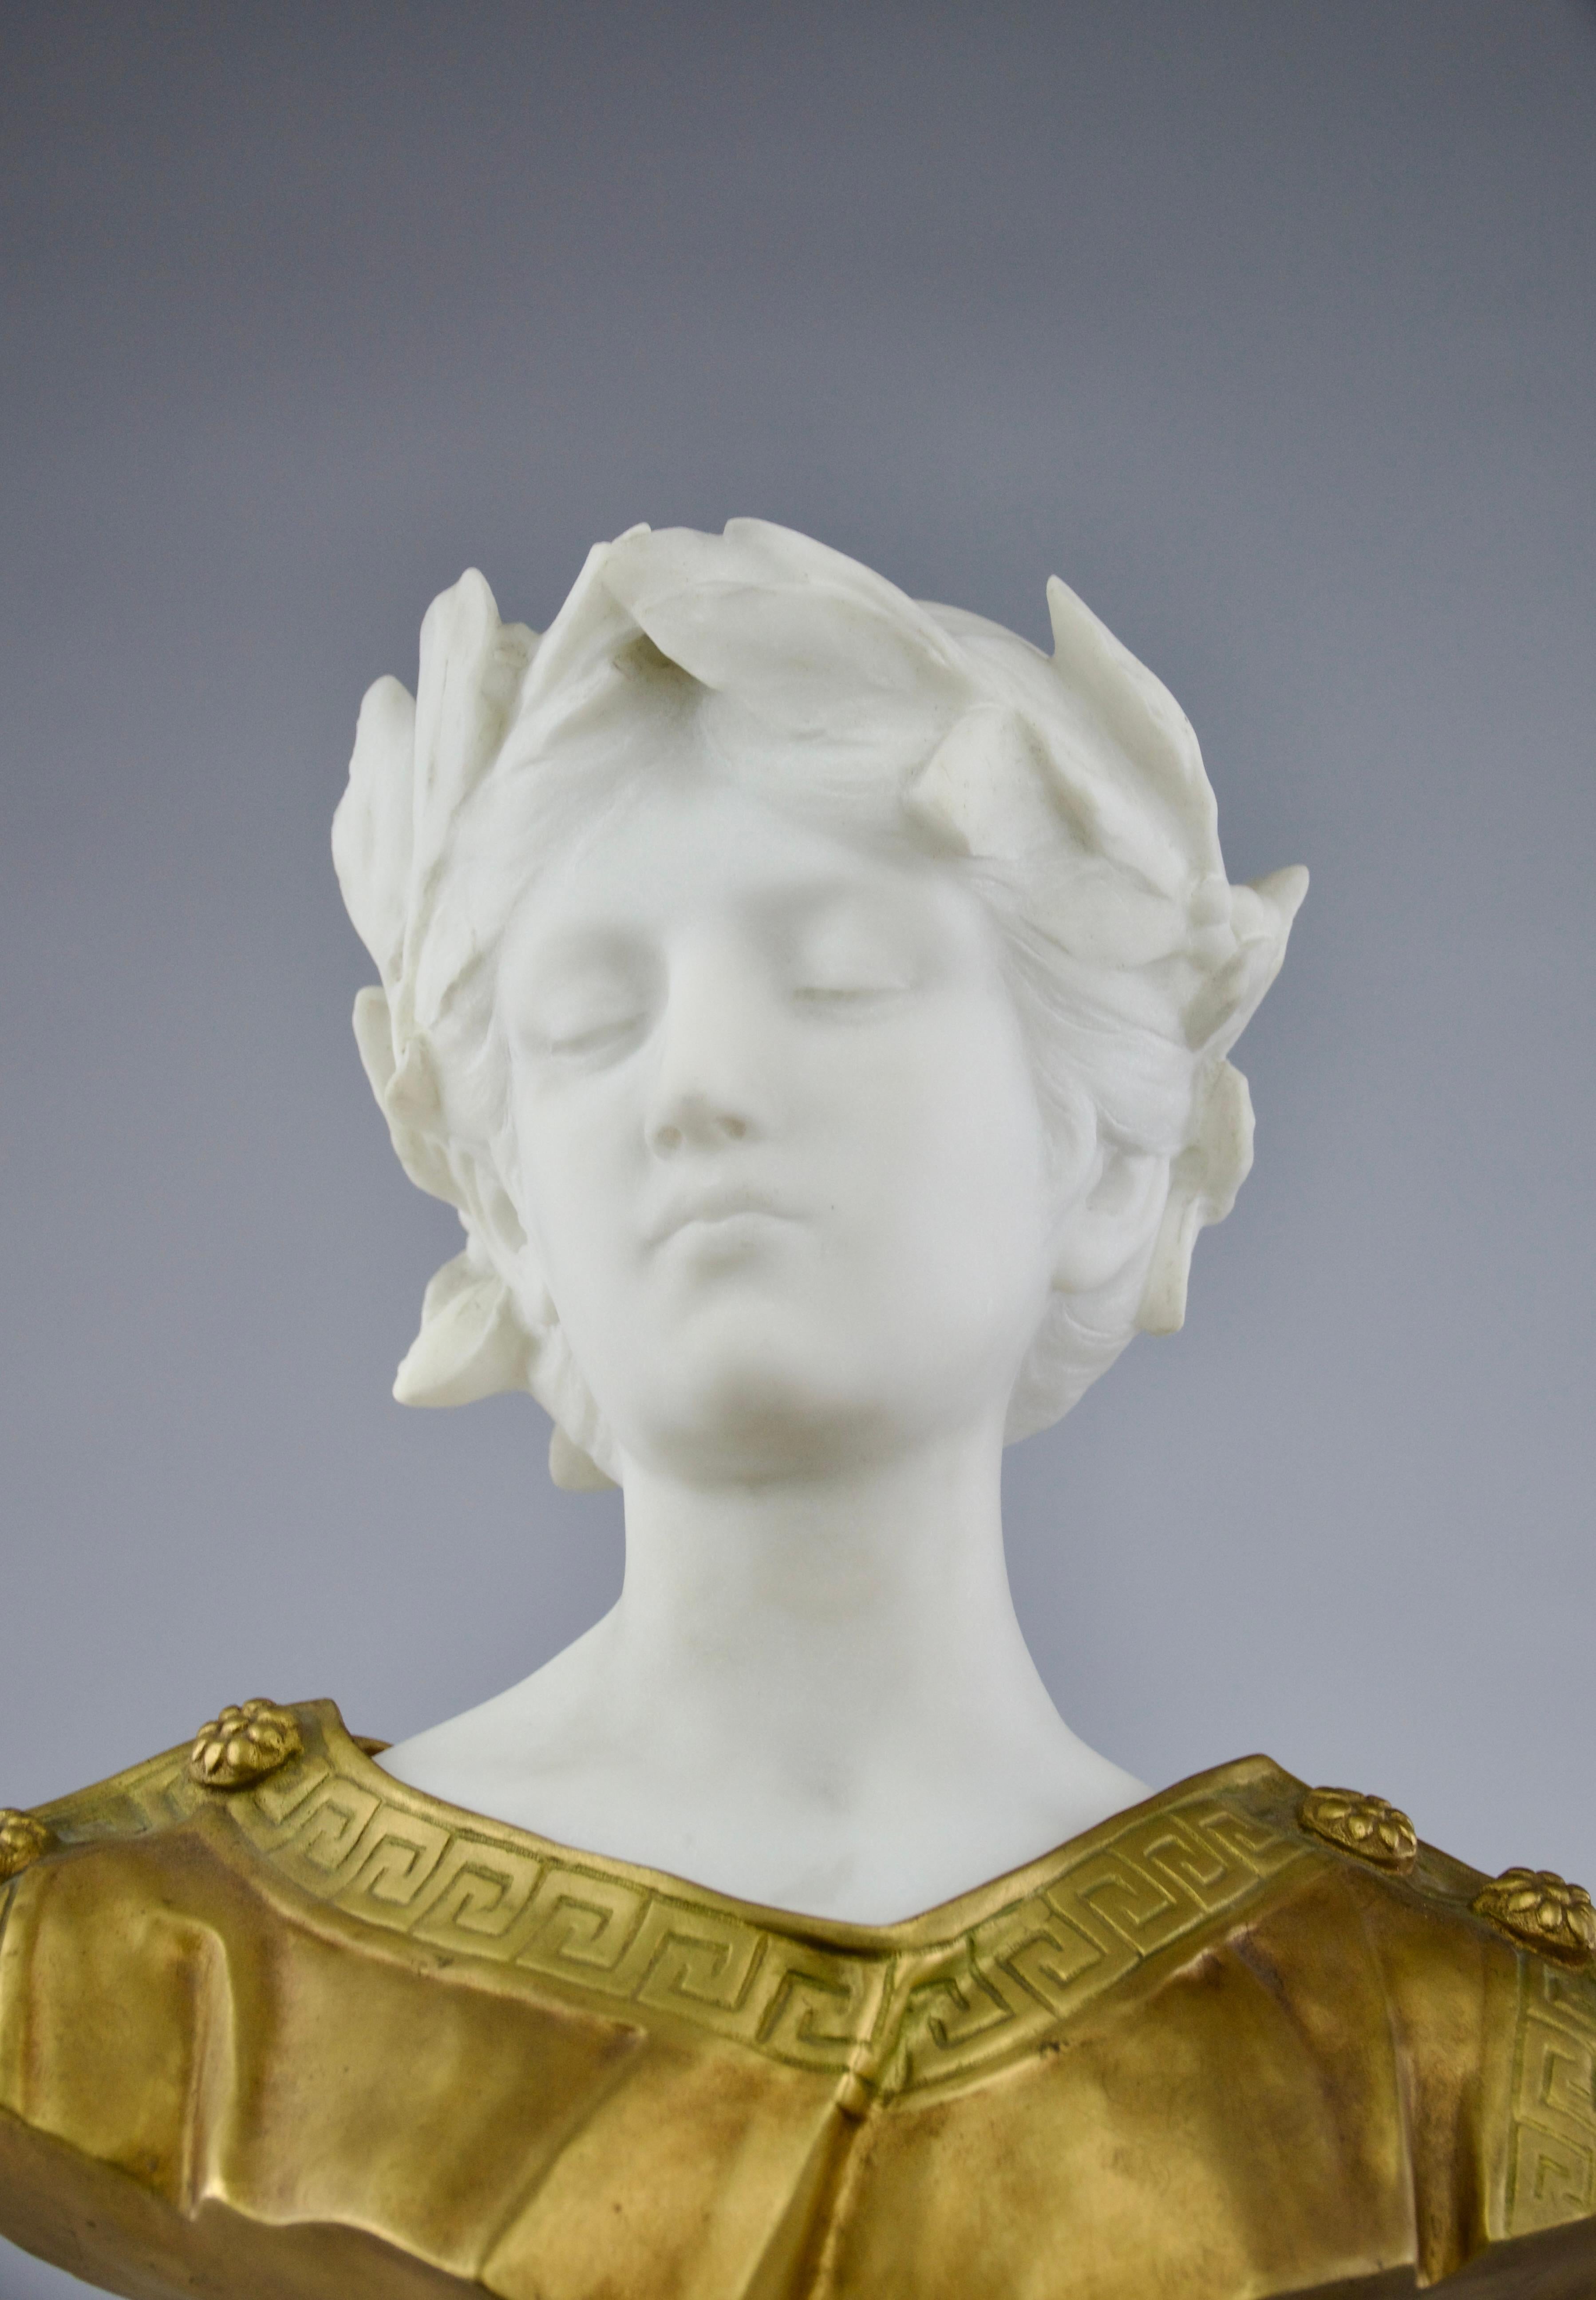 Italian Attilio Fagioli, Young Emperor Bust Sculpture, Italy Early 20th Century For Sale